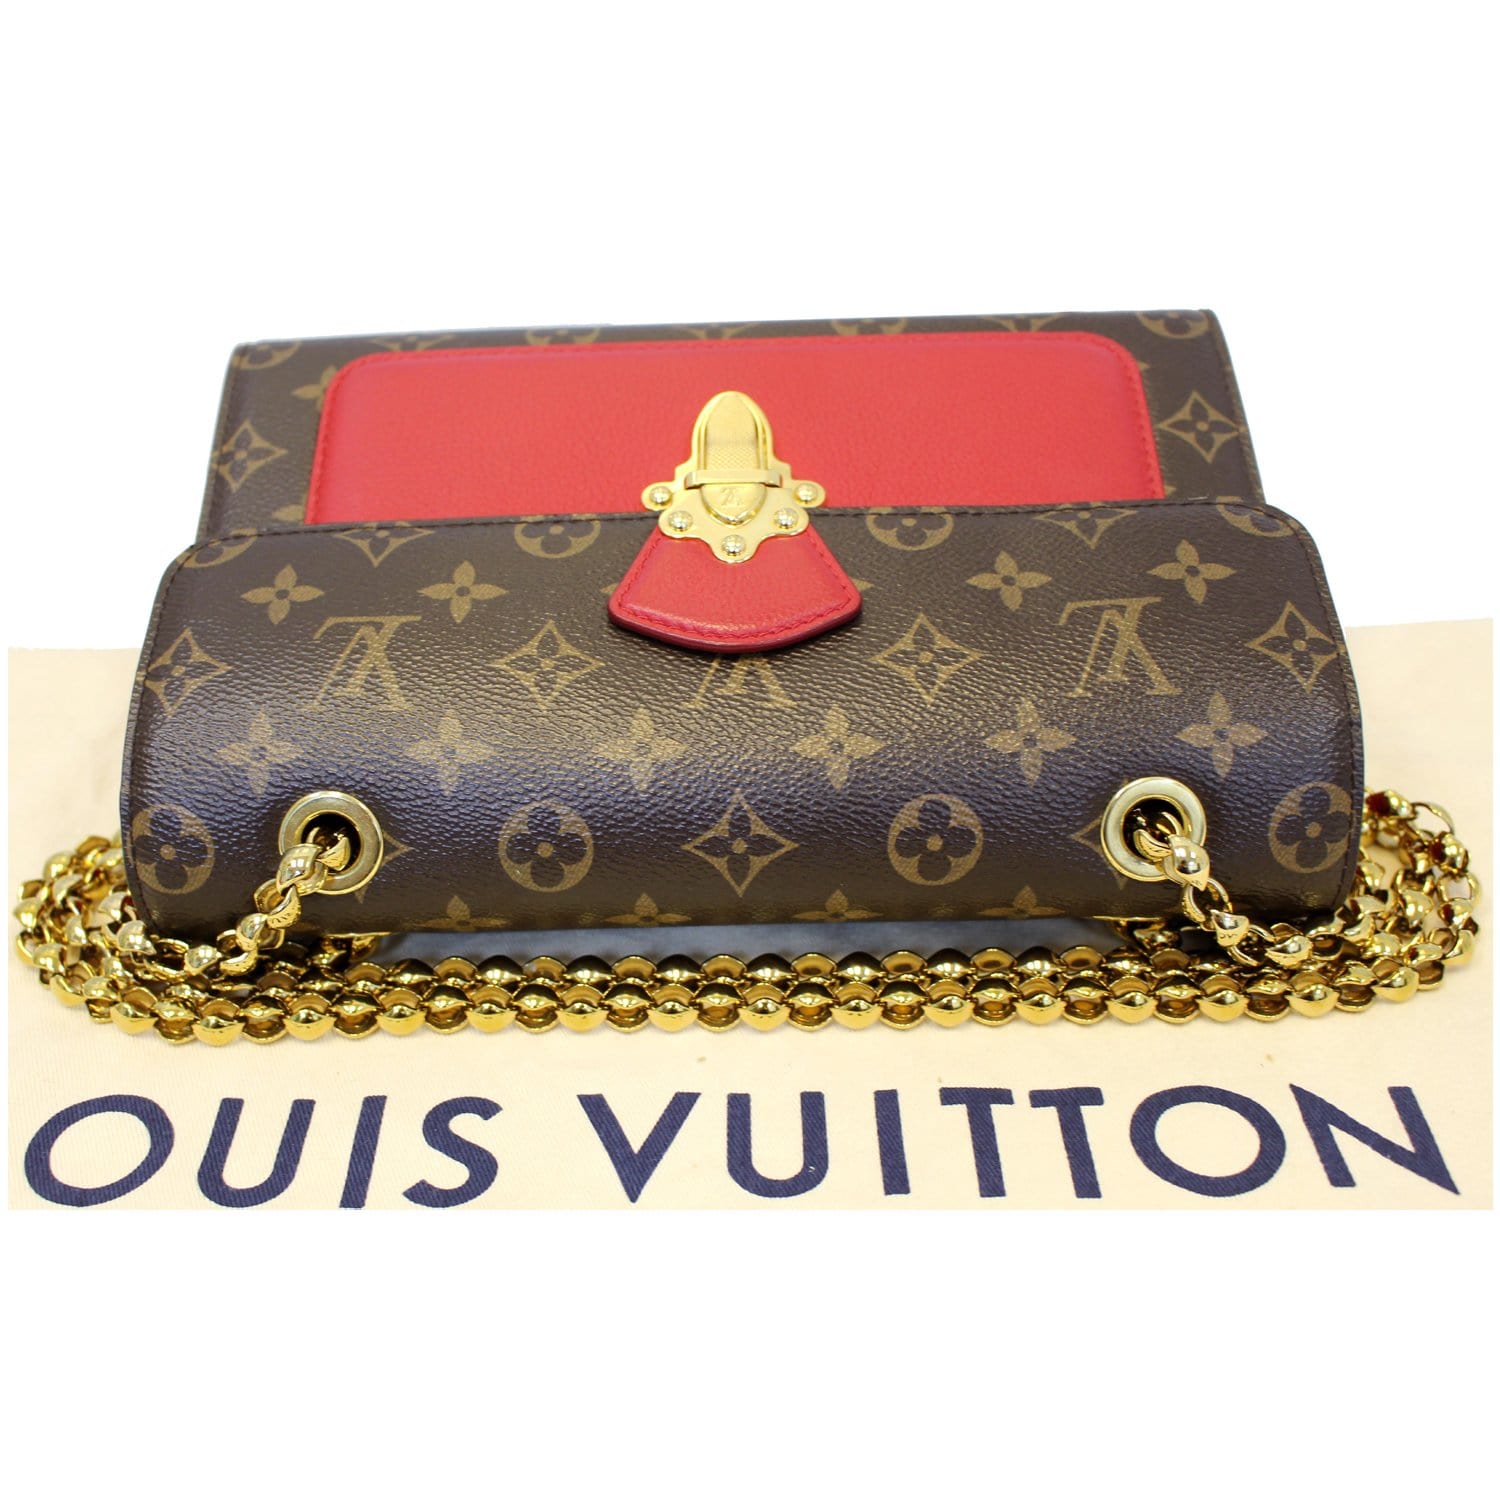 LOUIS VUITTON VICTOIRE IN RED. ‼️FULLSET‼️$2400 RETAIL: $3100